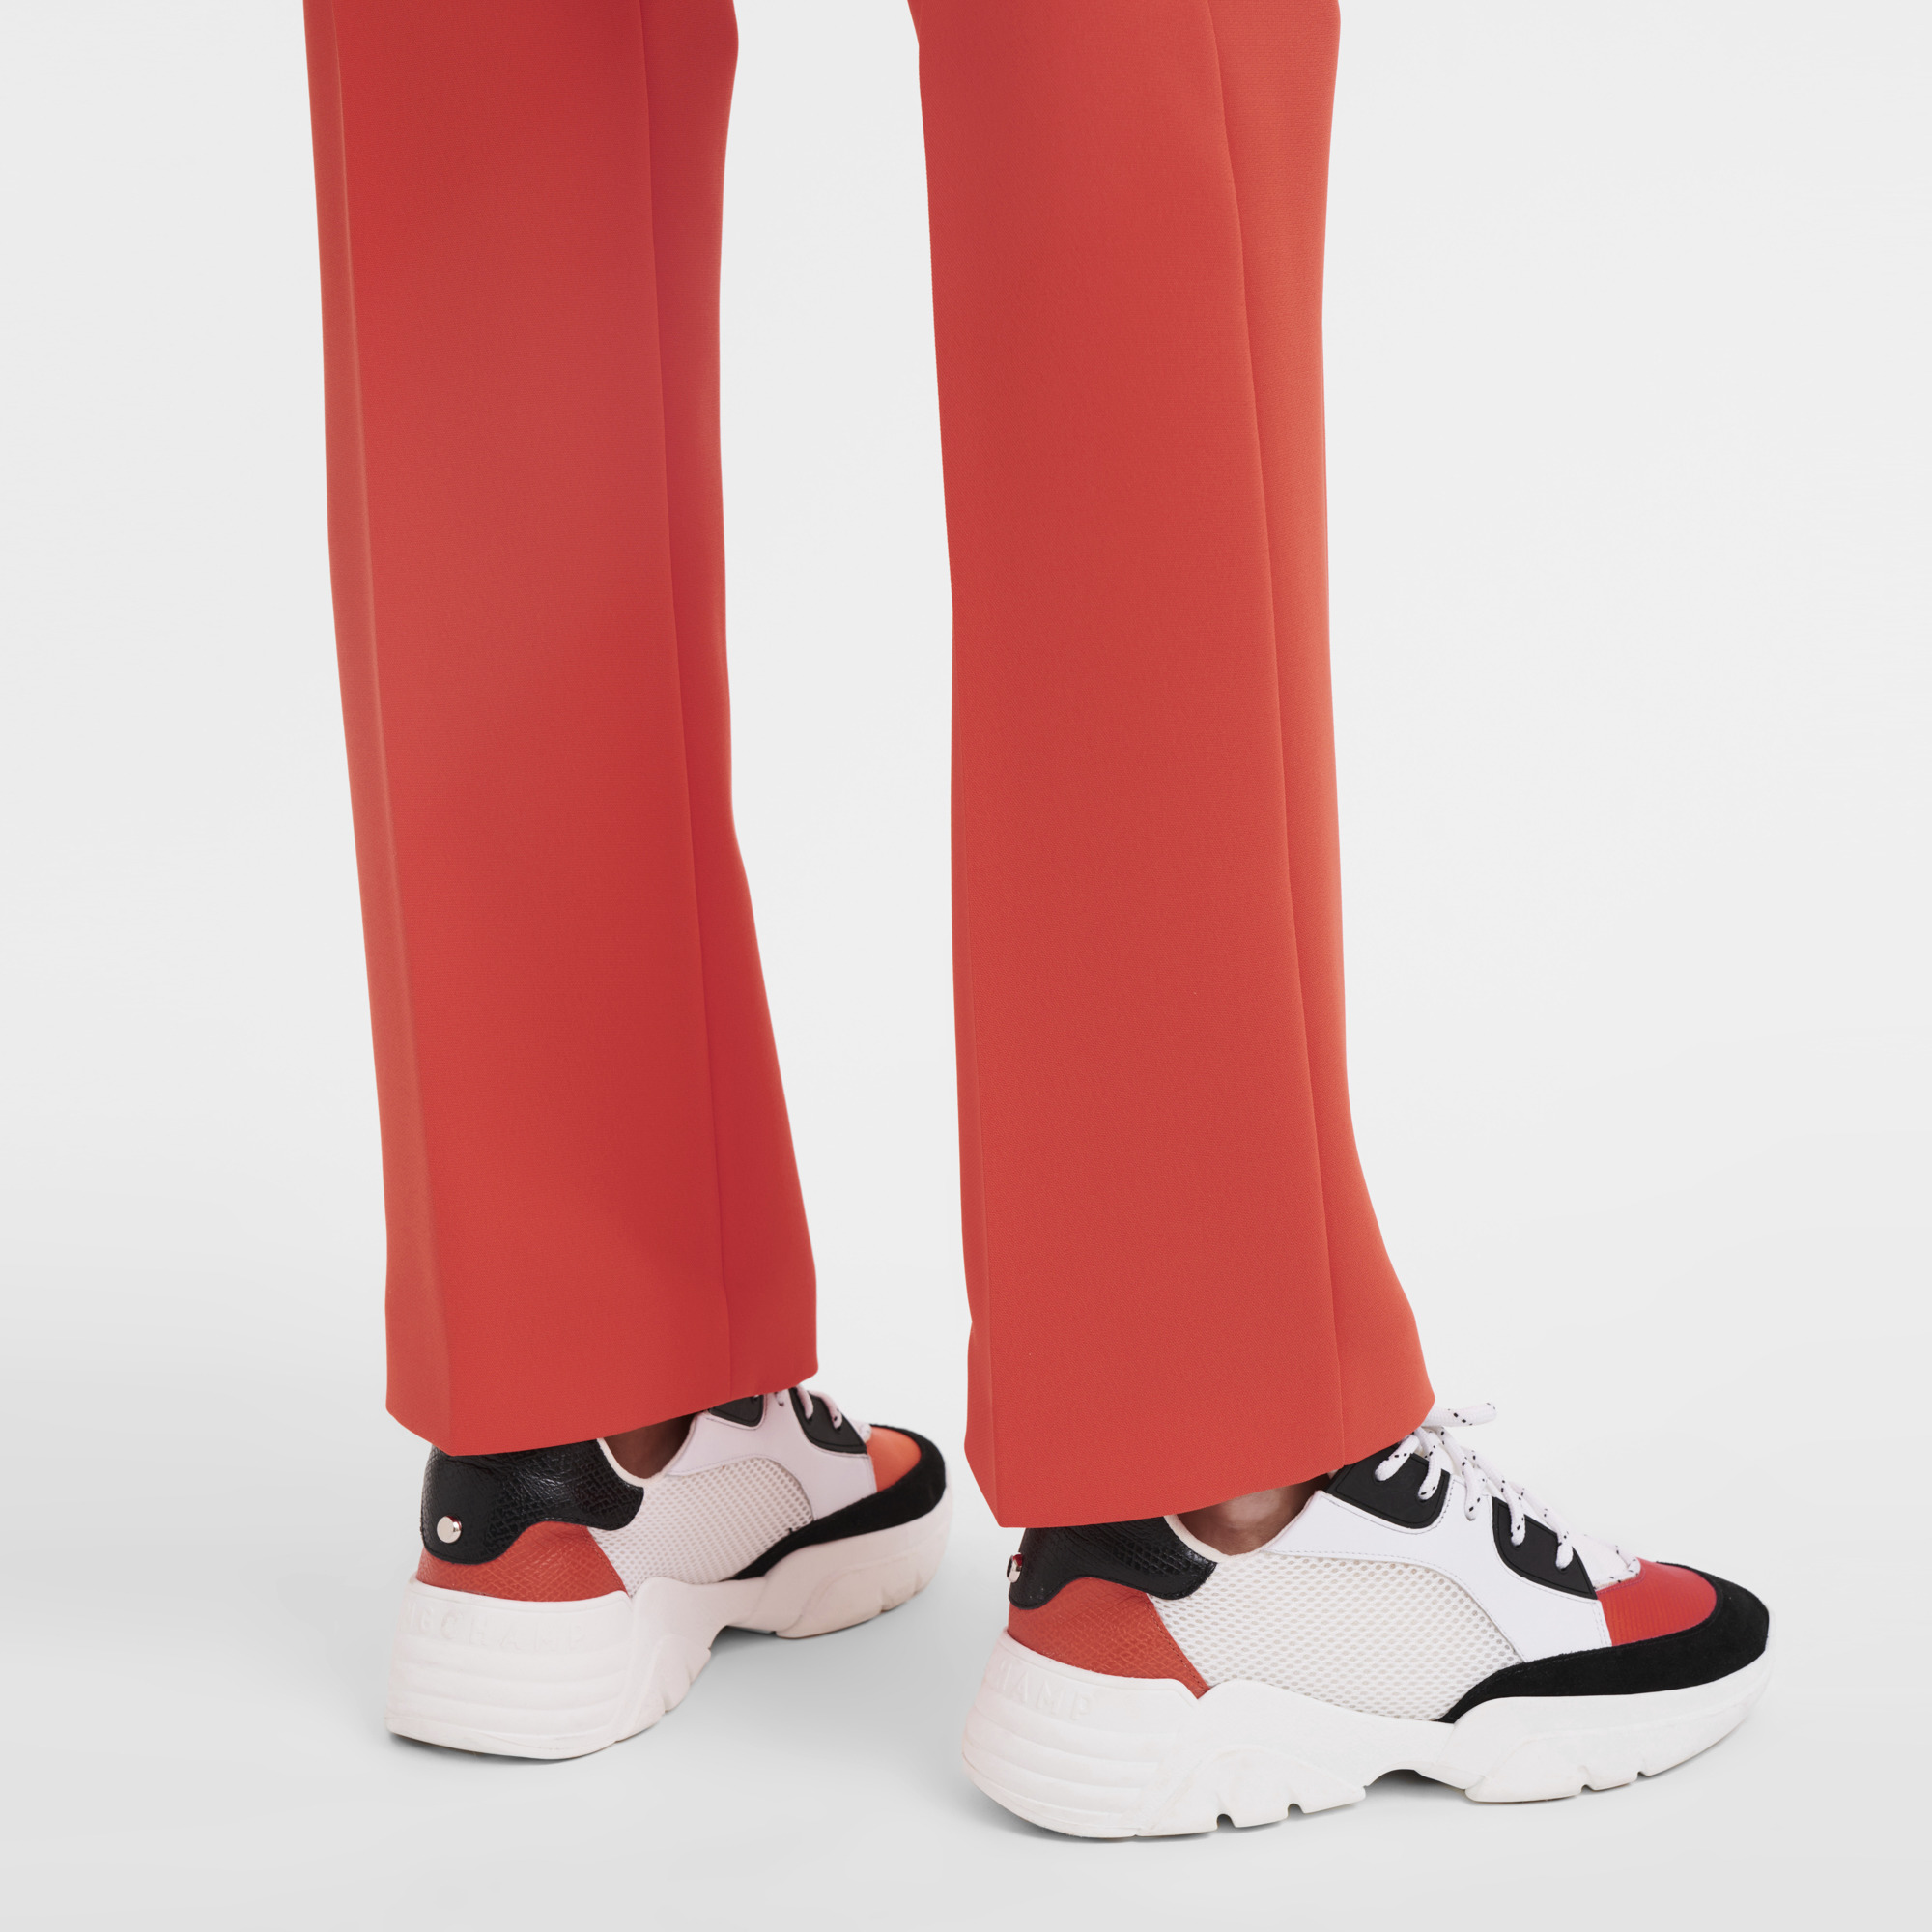 Freeminder Sneakers Poppy - Leather - 6